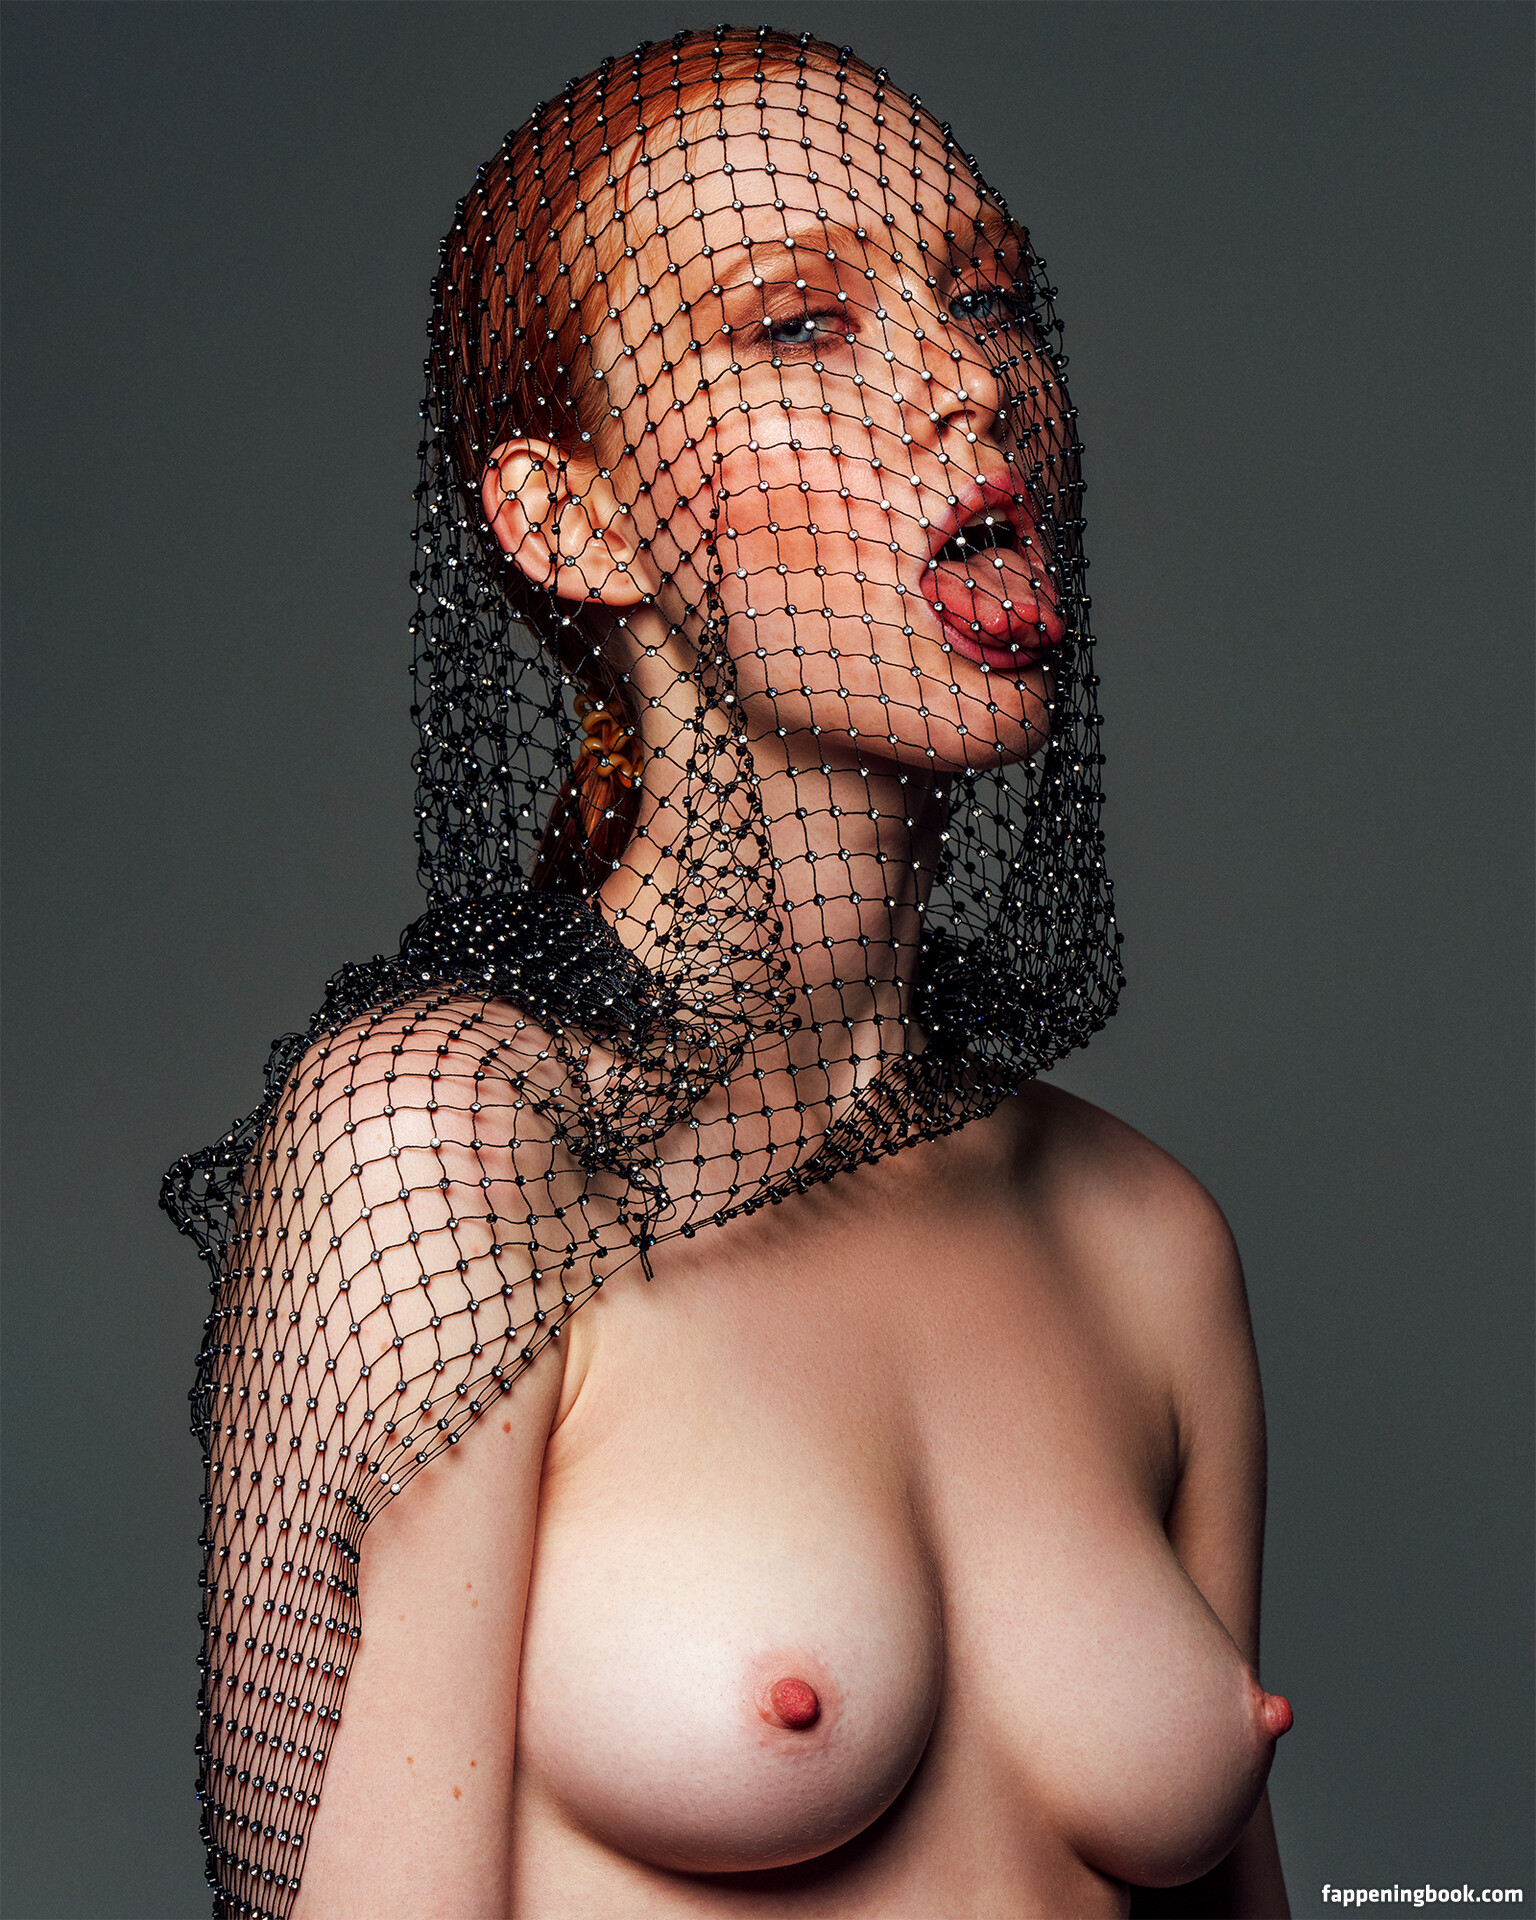 Arina bik bares it all in luxury nude photography